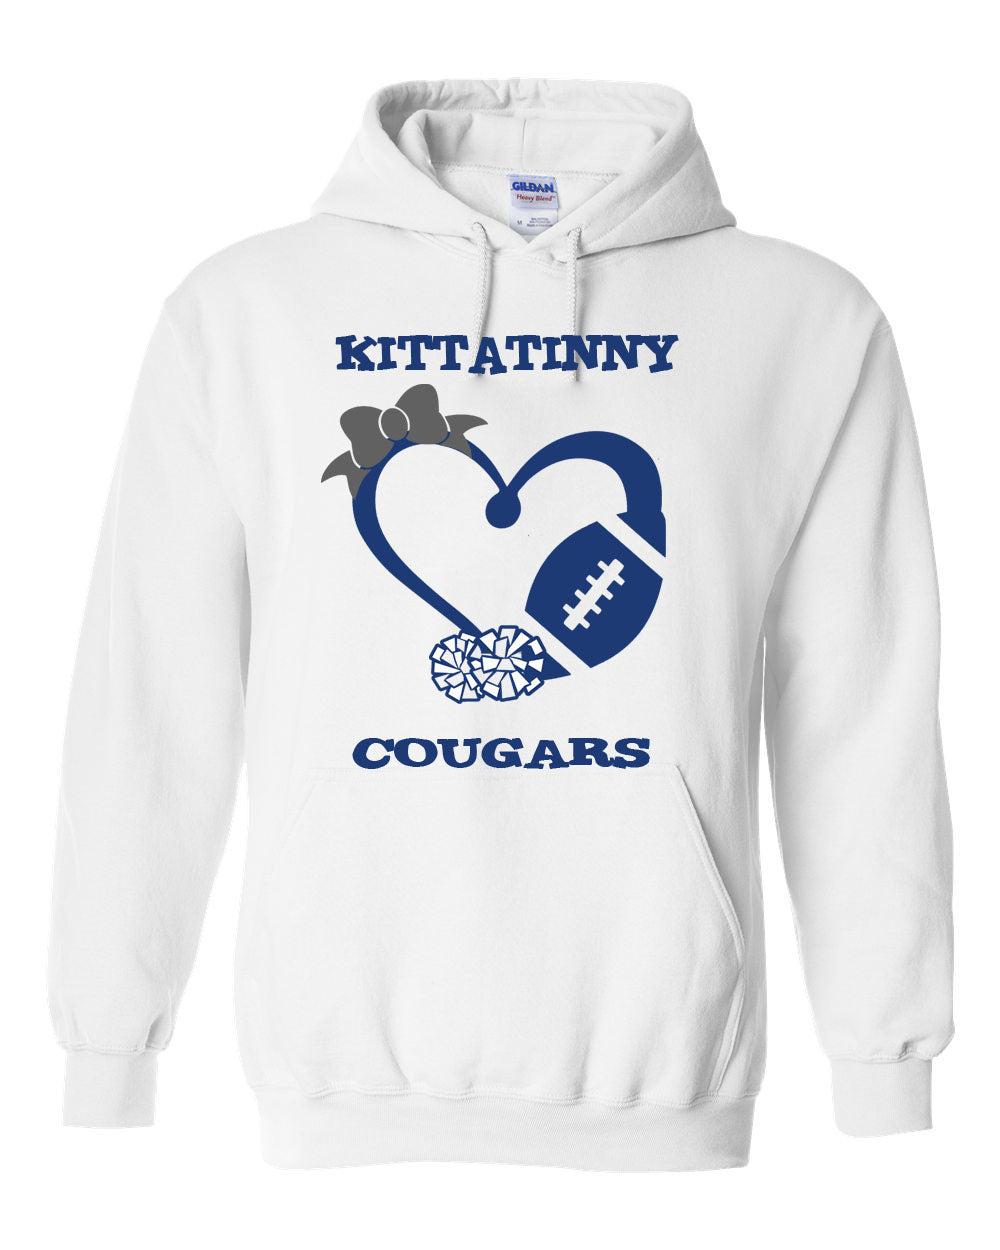 Kittatinny Cheer Design 3 Hooded Sweatshirt